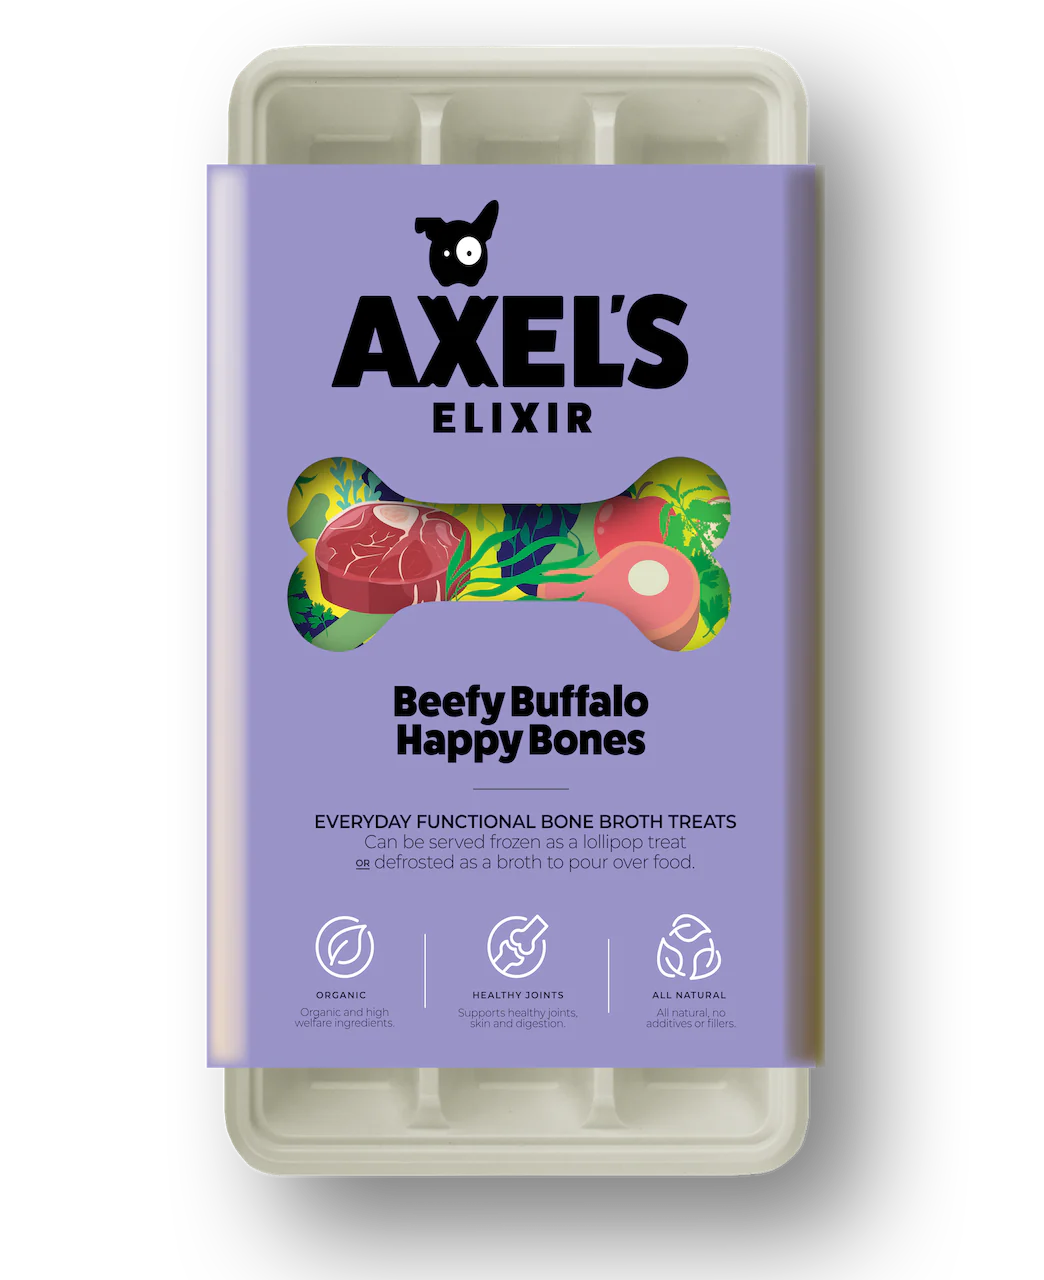 Axels Elixir Beefy Buffalo Happy Bones